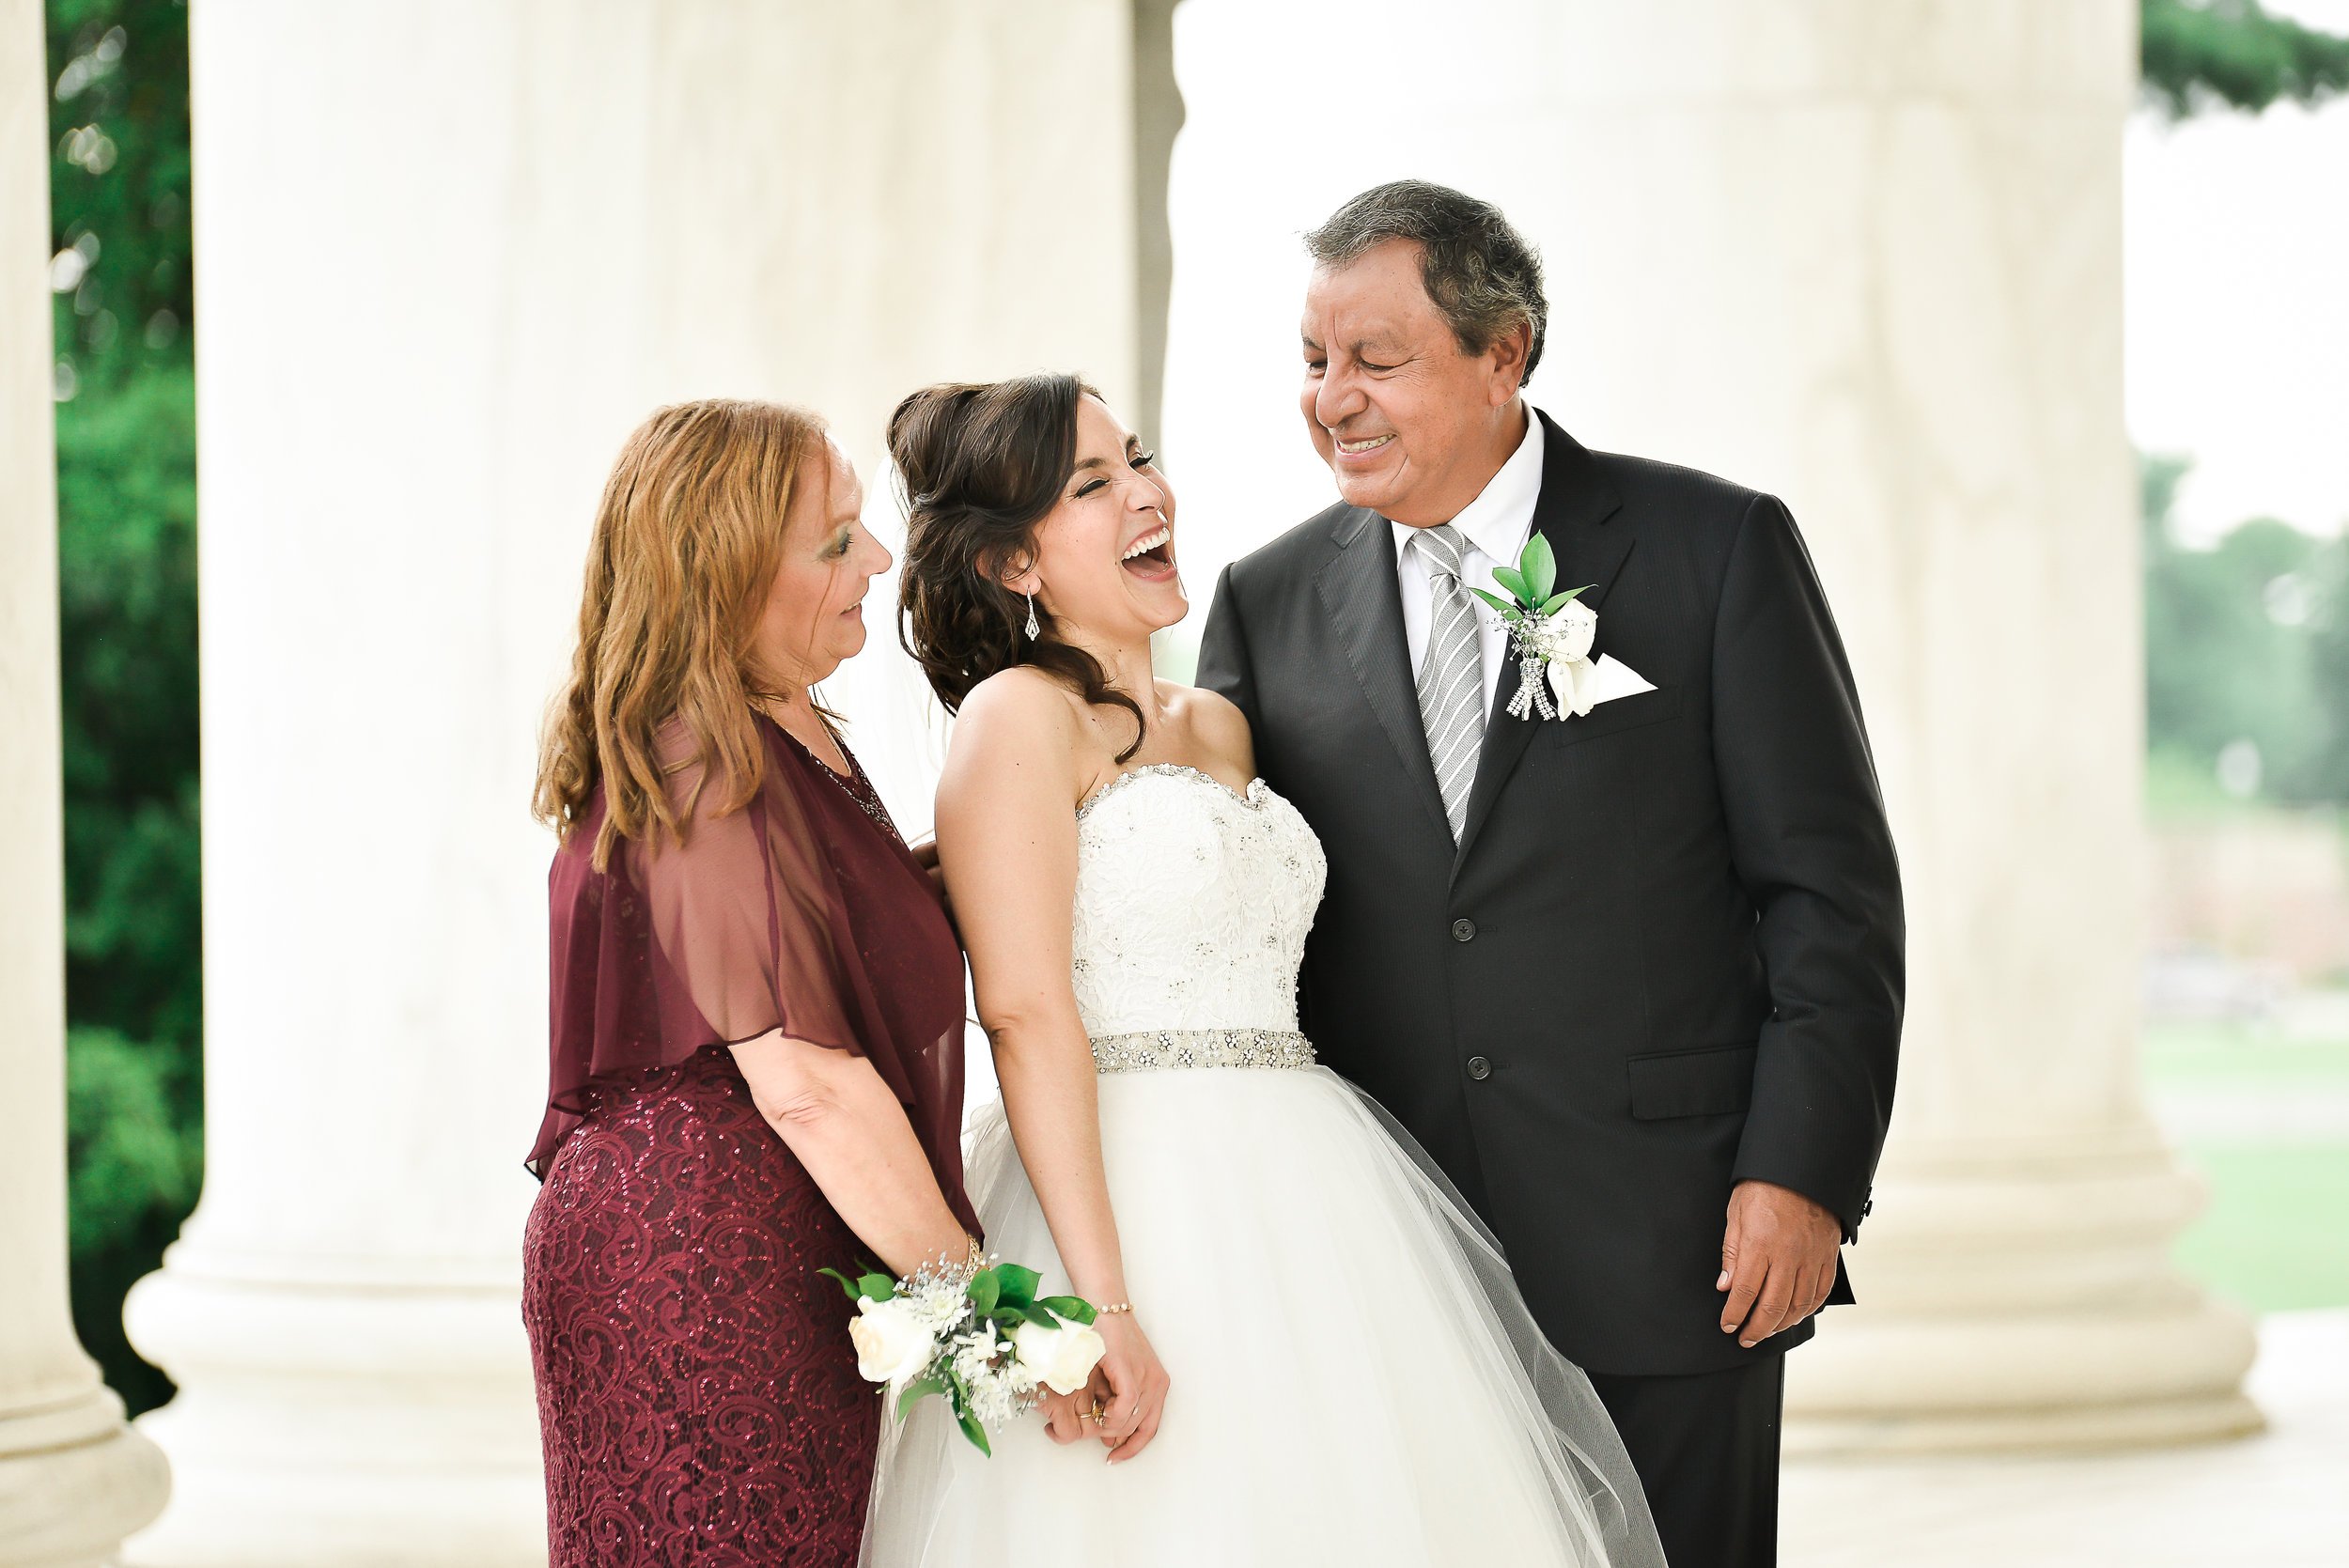 Jefferson Memorial Wedding Photography